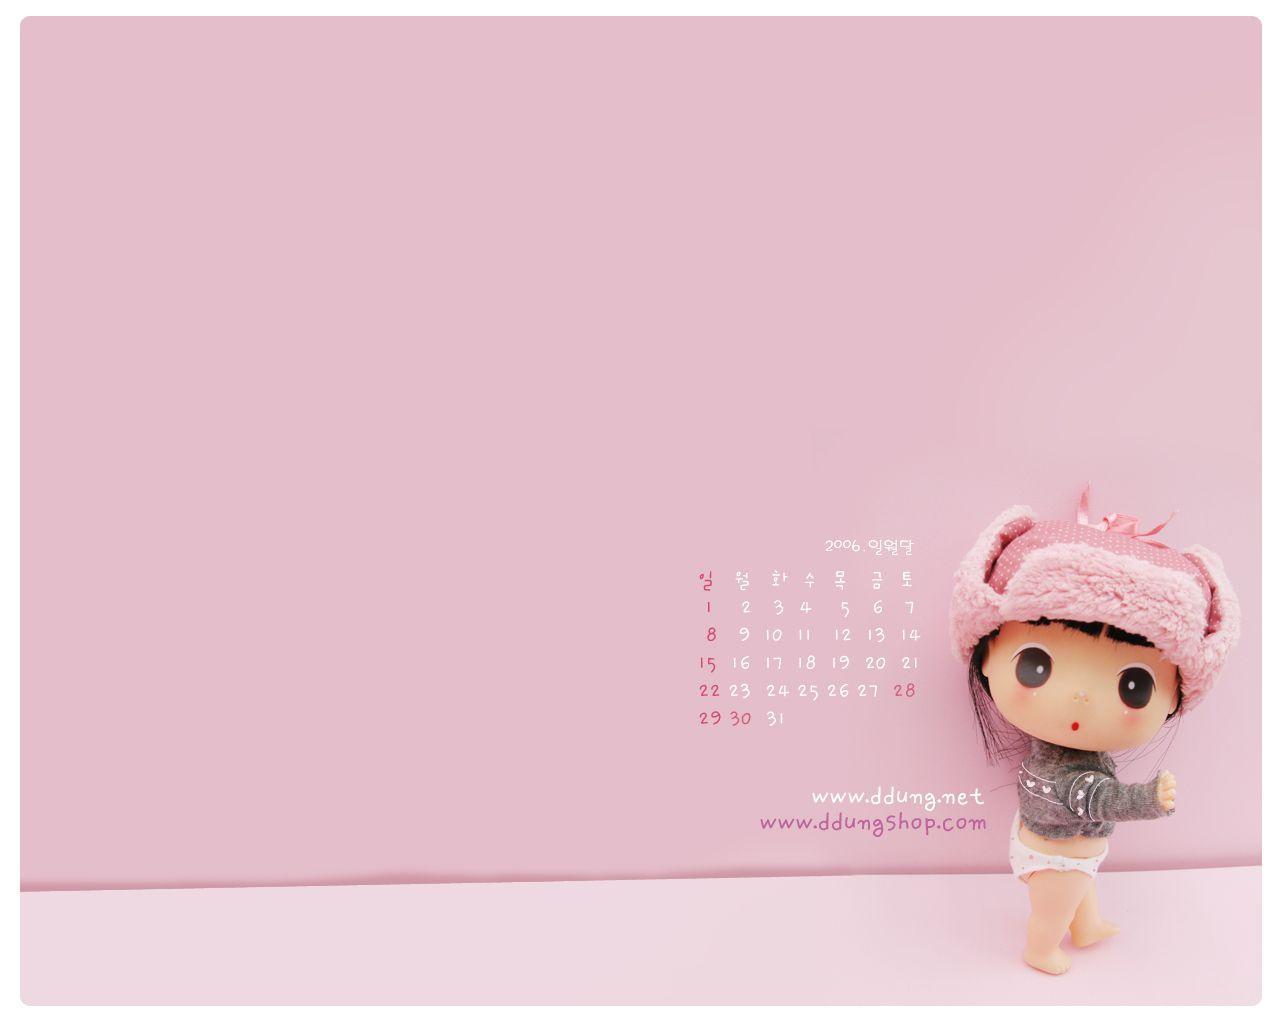 Wallpaper For > Wallpaper Pink Cute For Desktop